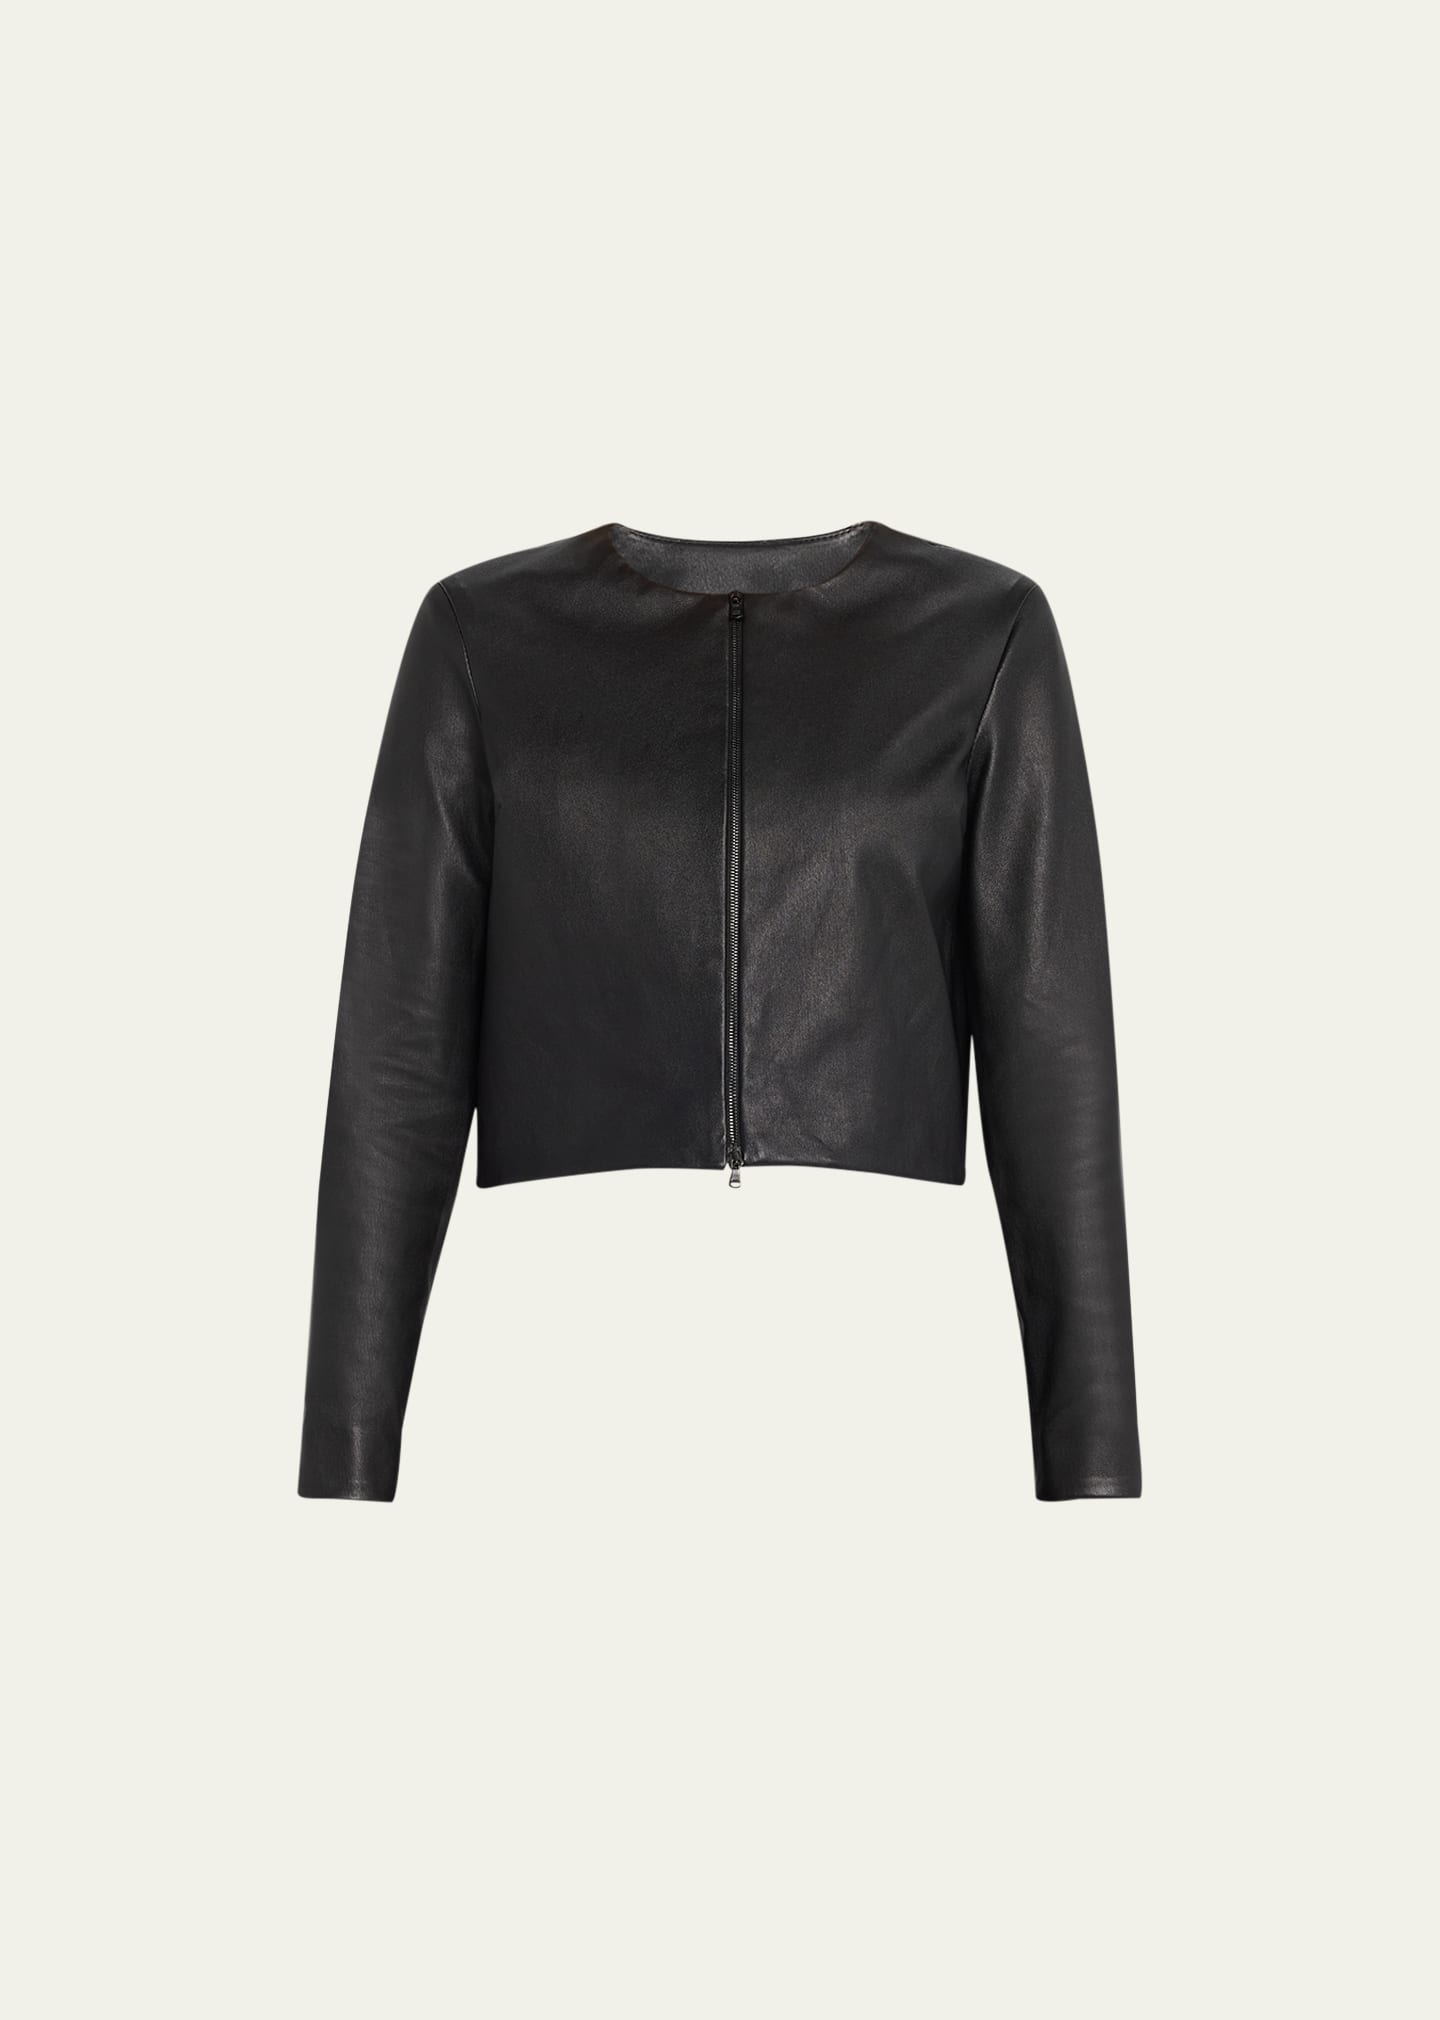 Susan Bender Stretch Leather Long-Sleeve Cardigan Jacket